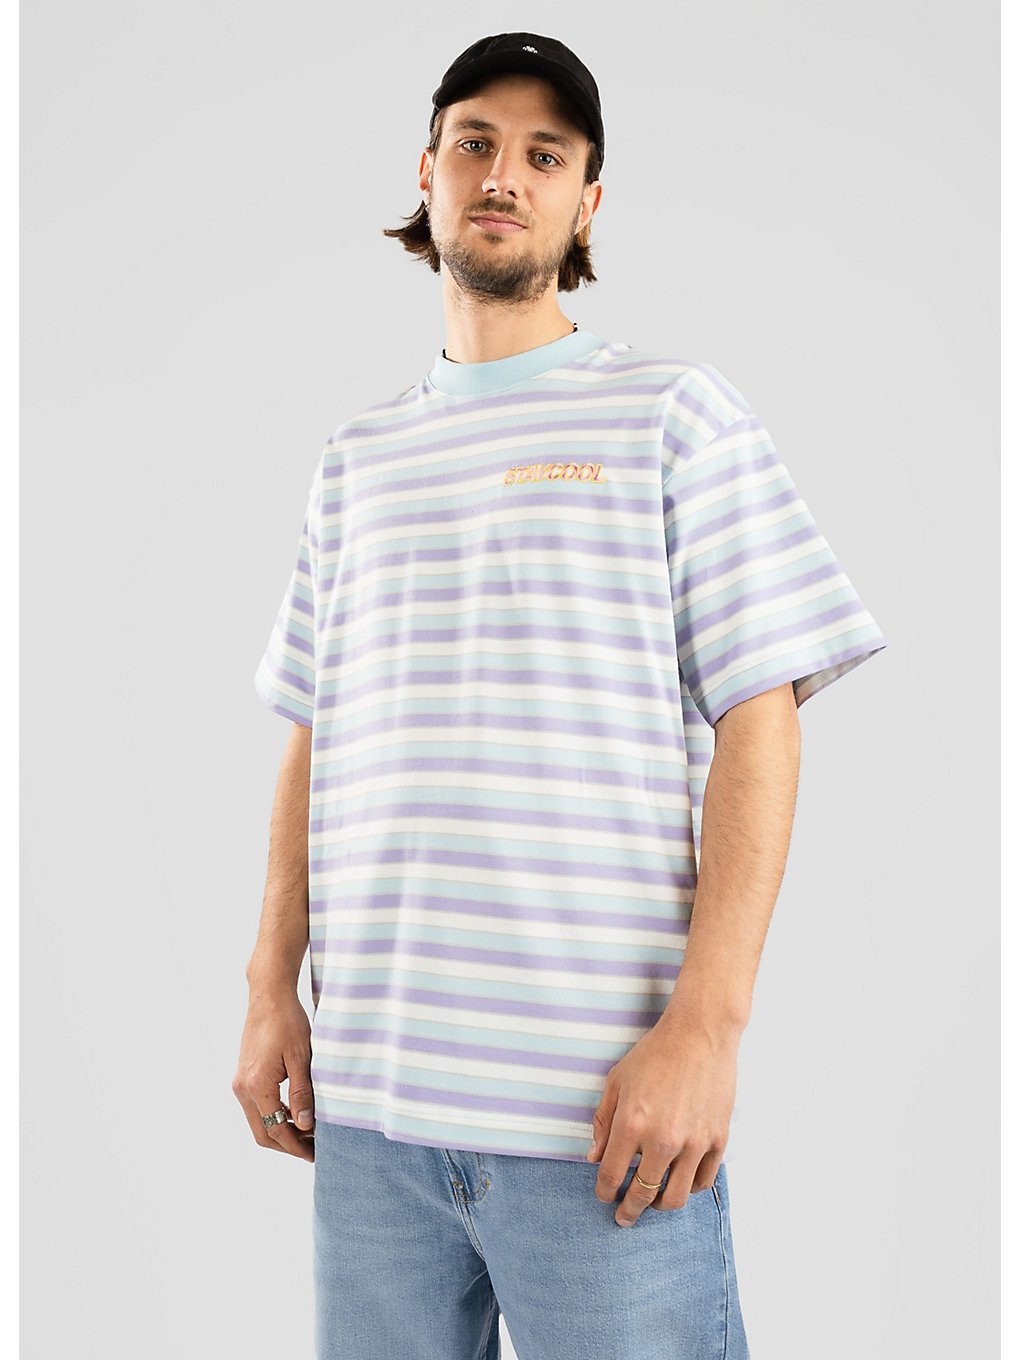 Staycoolnyc Blueberry Striped T-Shirt multi kaufen